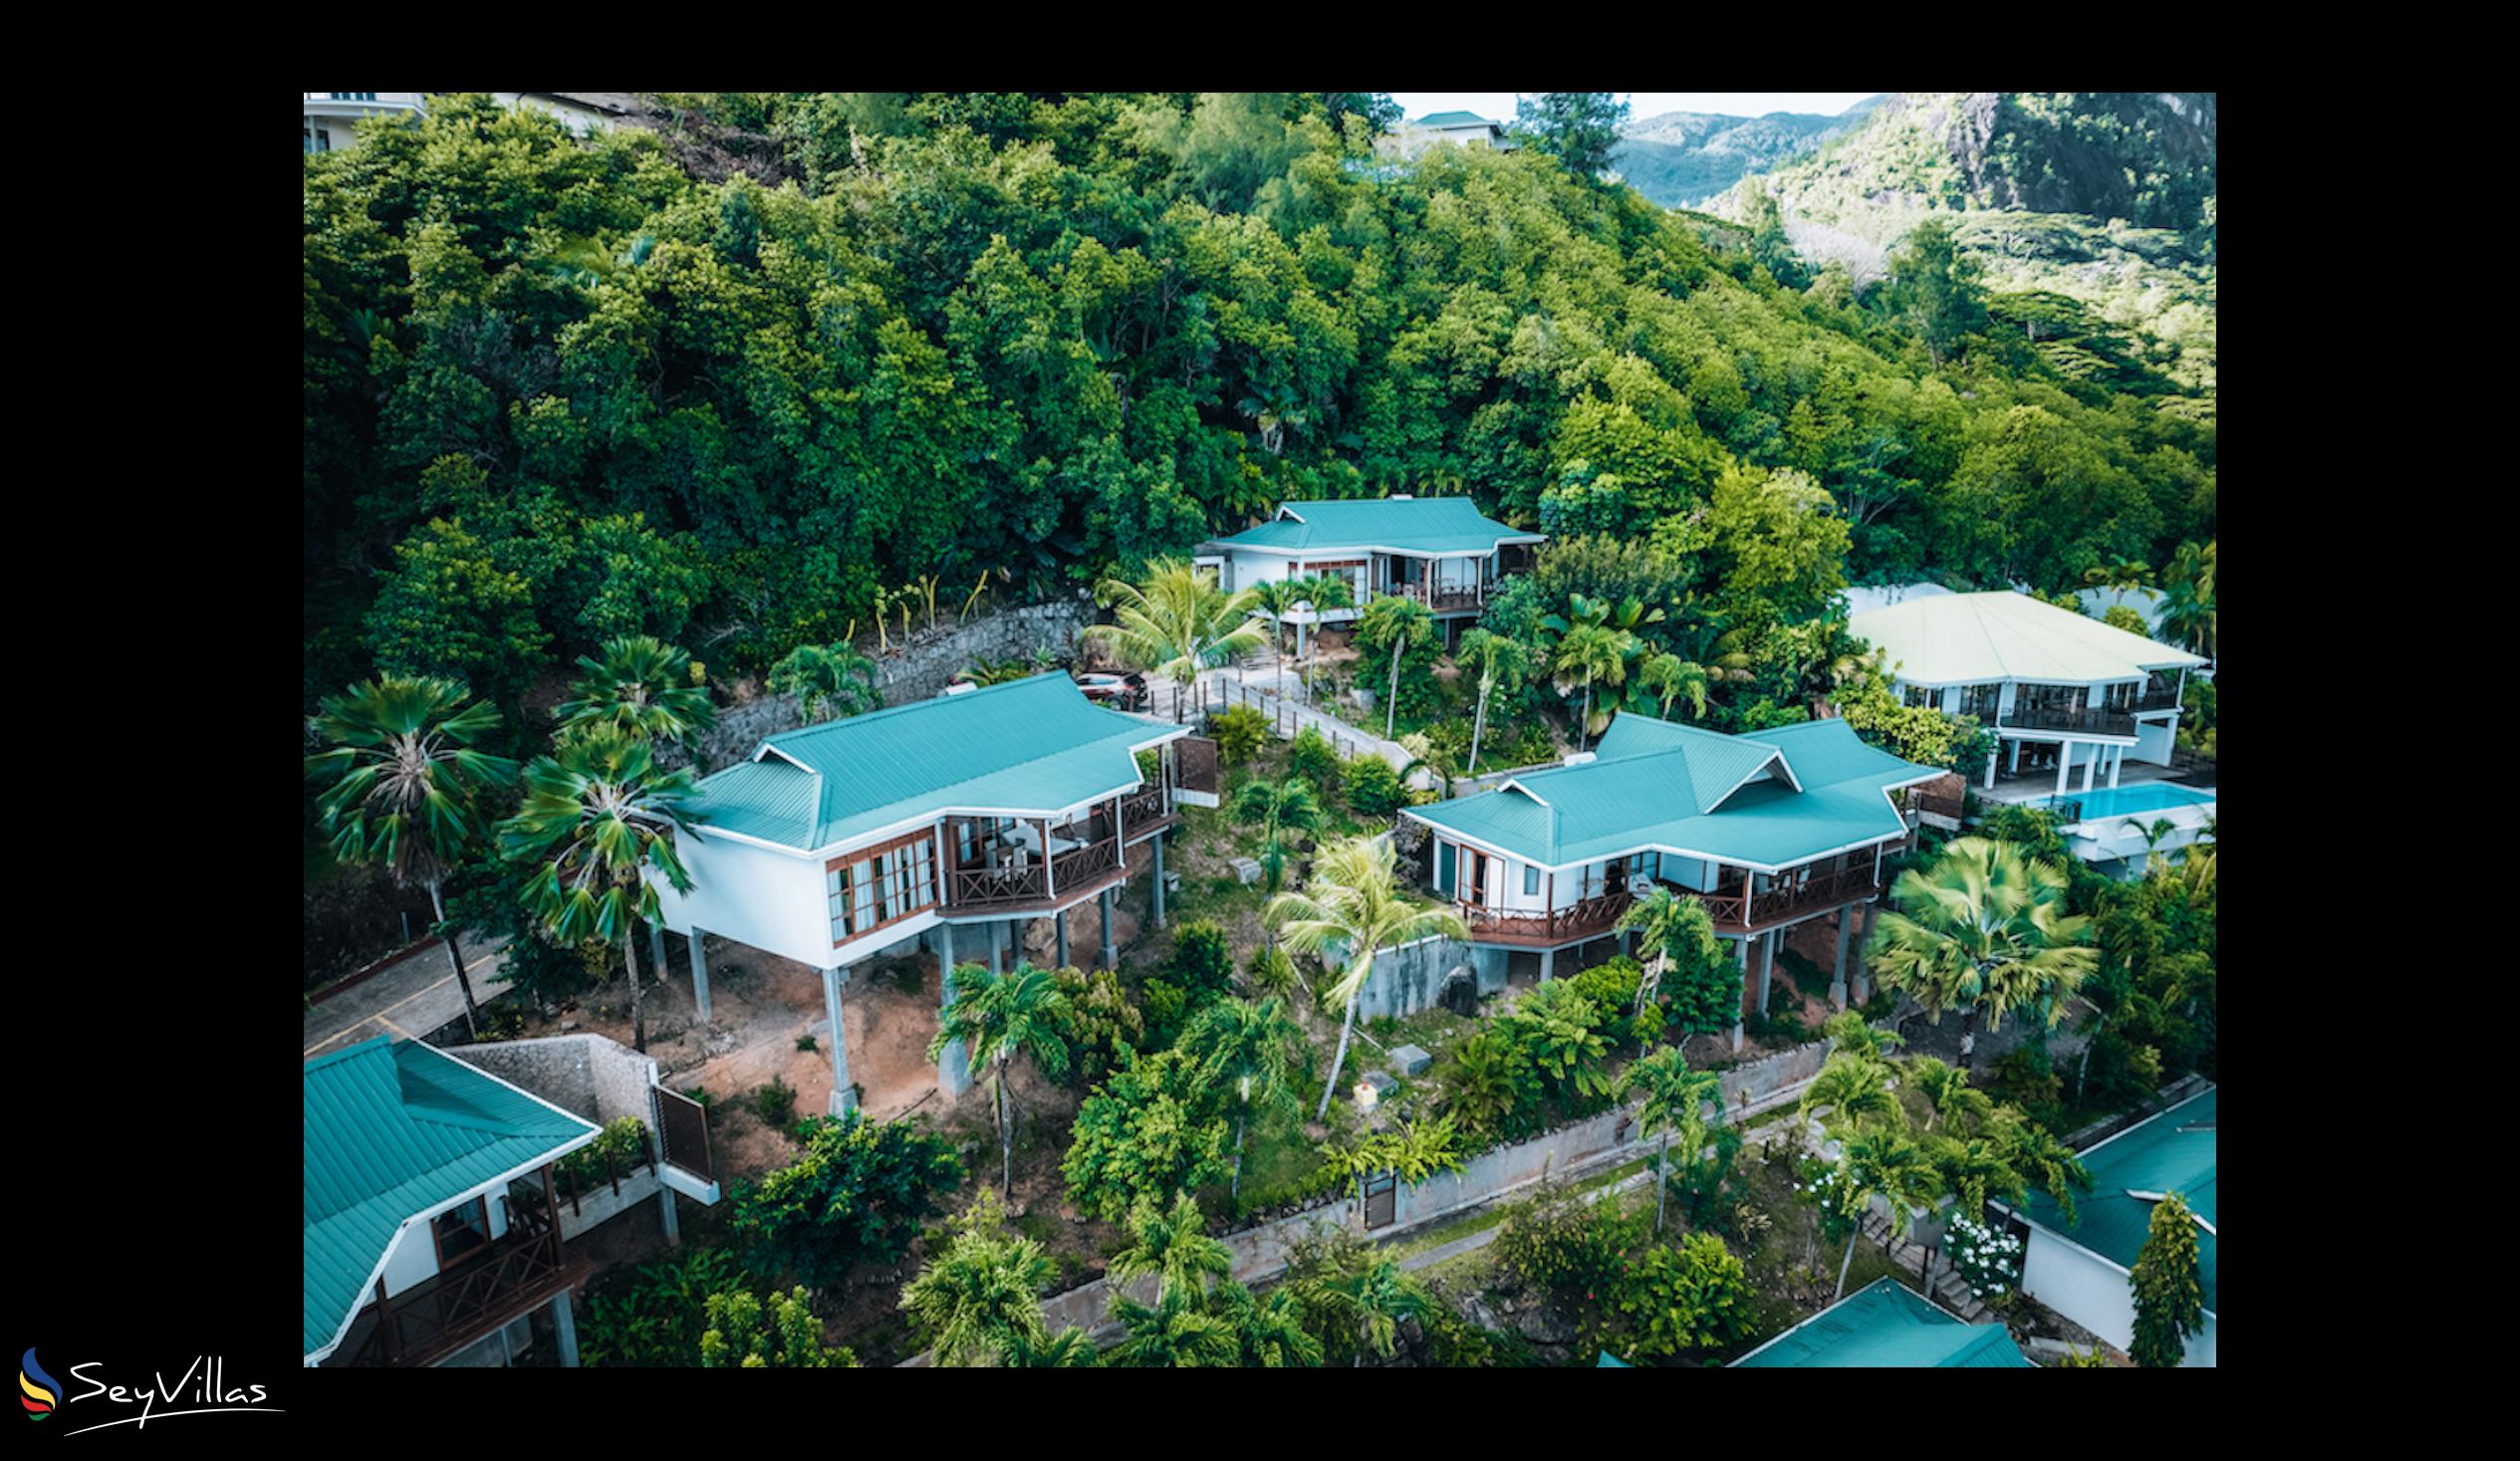 Photo 8: Villas de Jardin - Outdoor area - Mahé (Seychelles)